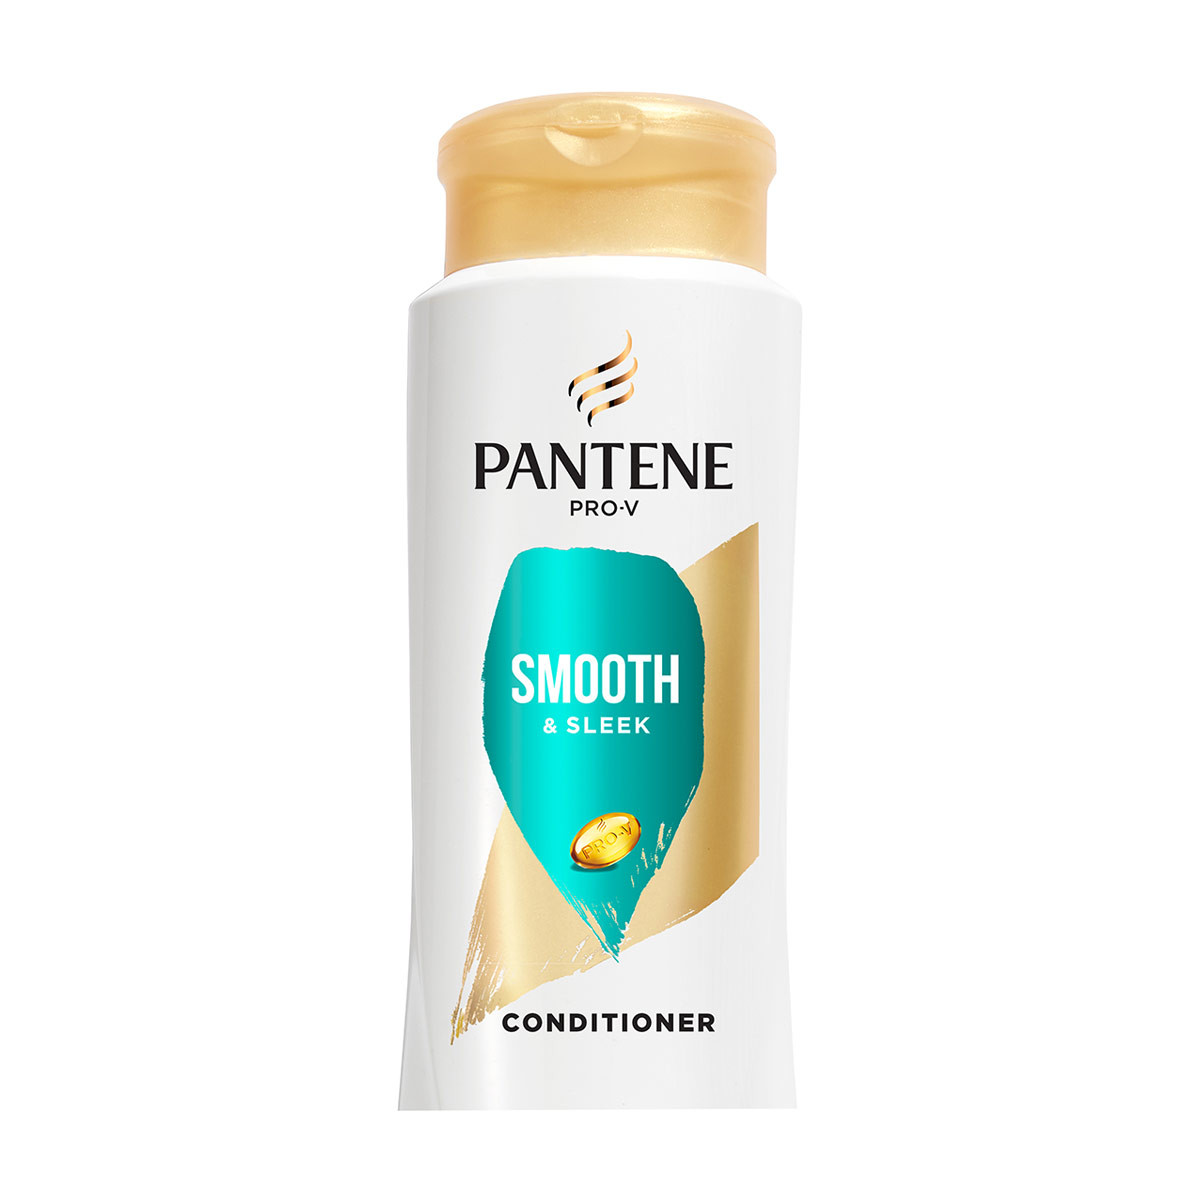 Pantene Pro-V Smooth & Sleek Conditioner, 16.7 fl oz